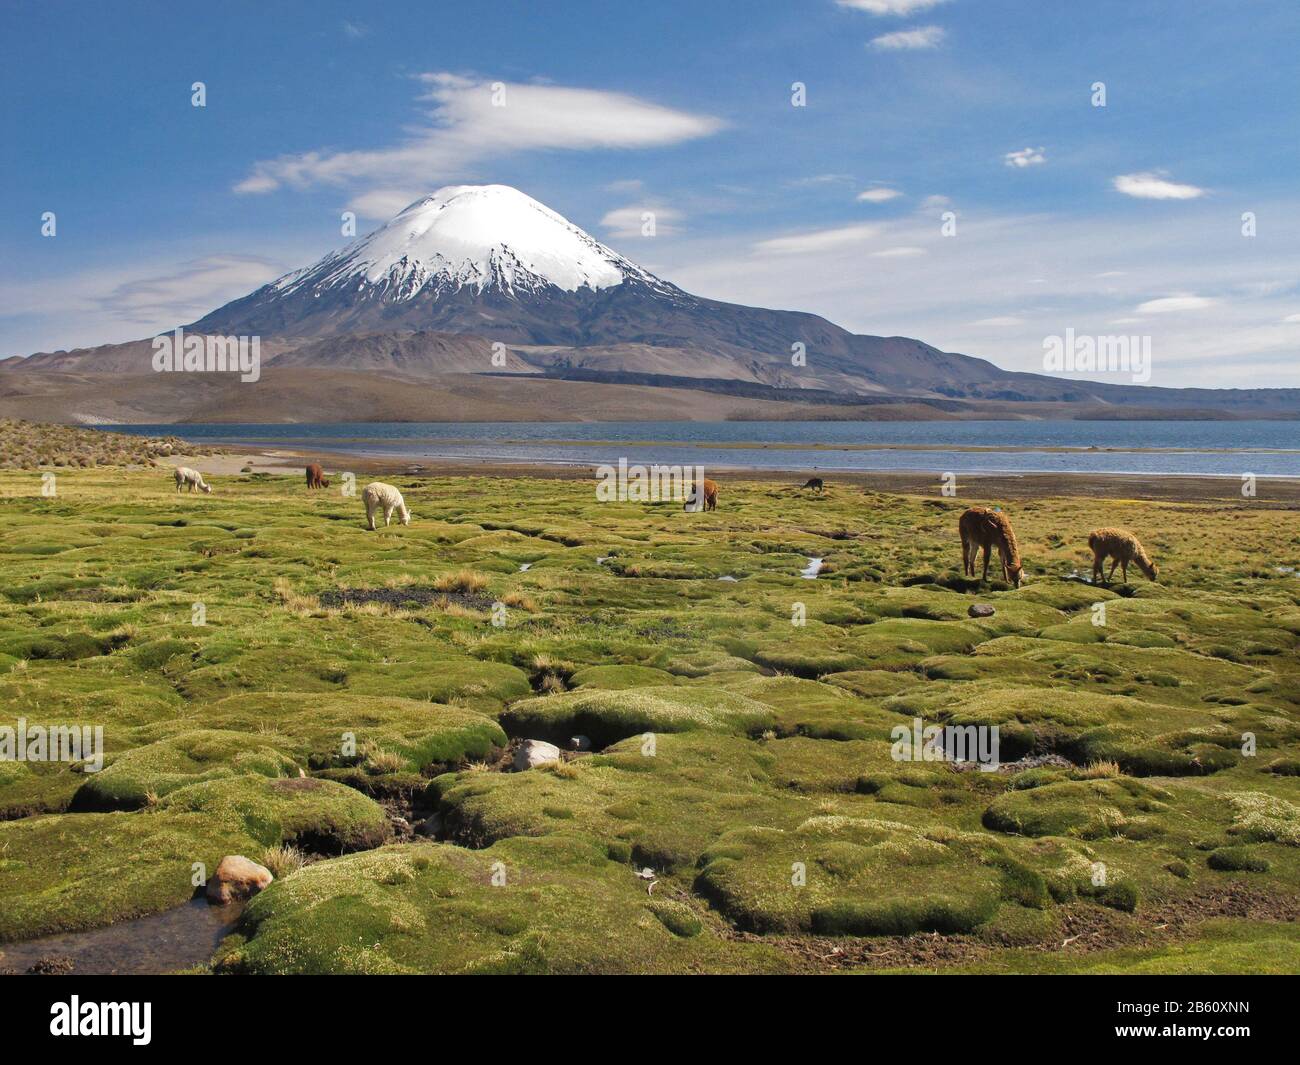 Volcano Parinacota and alpacas grazing in Chile Stock Photo